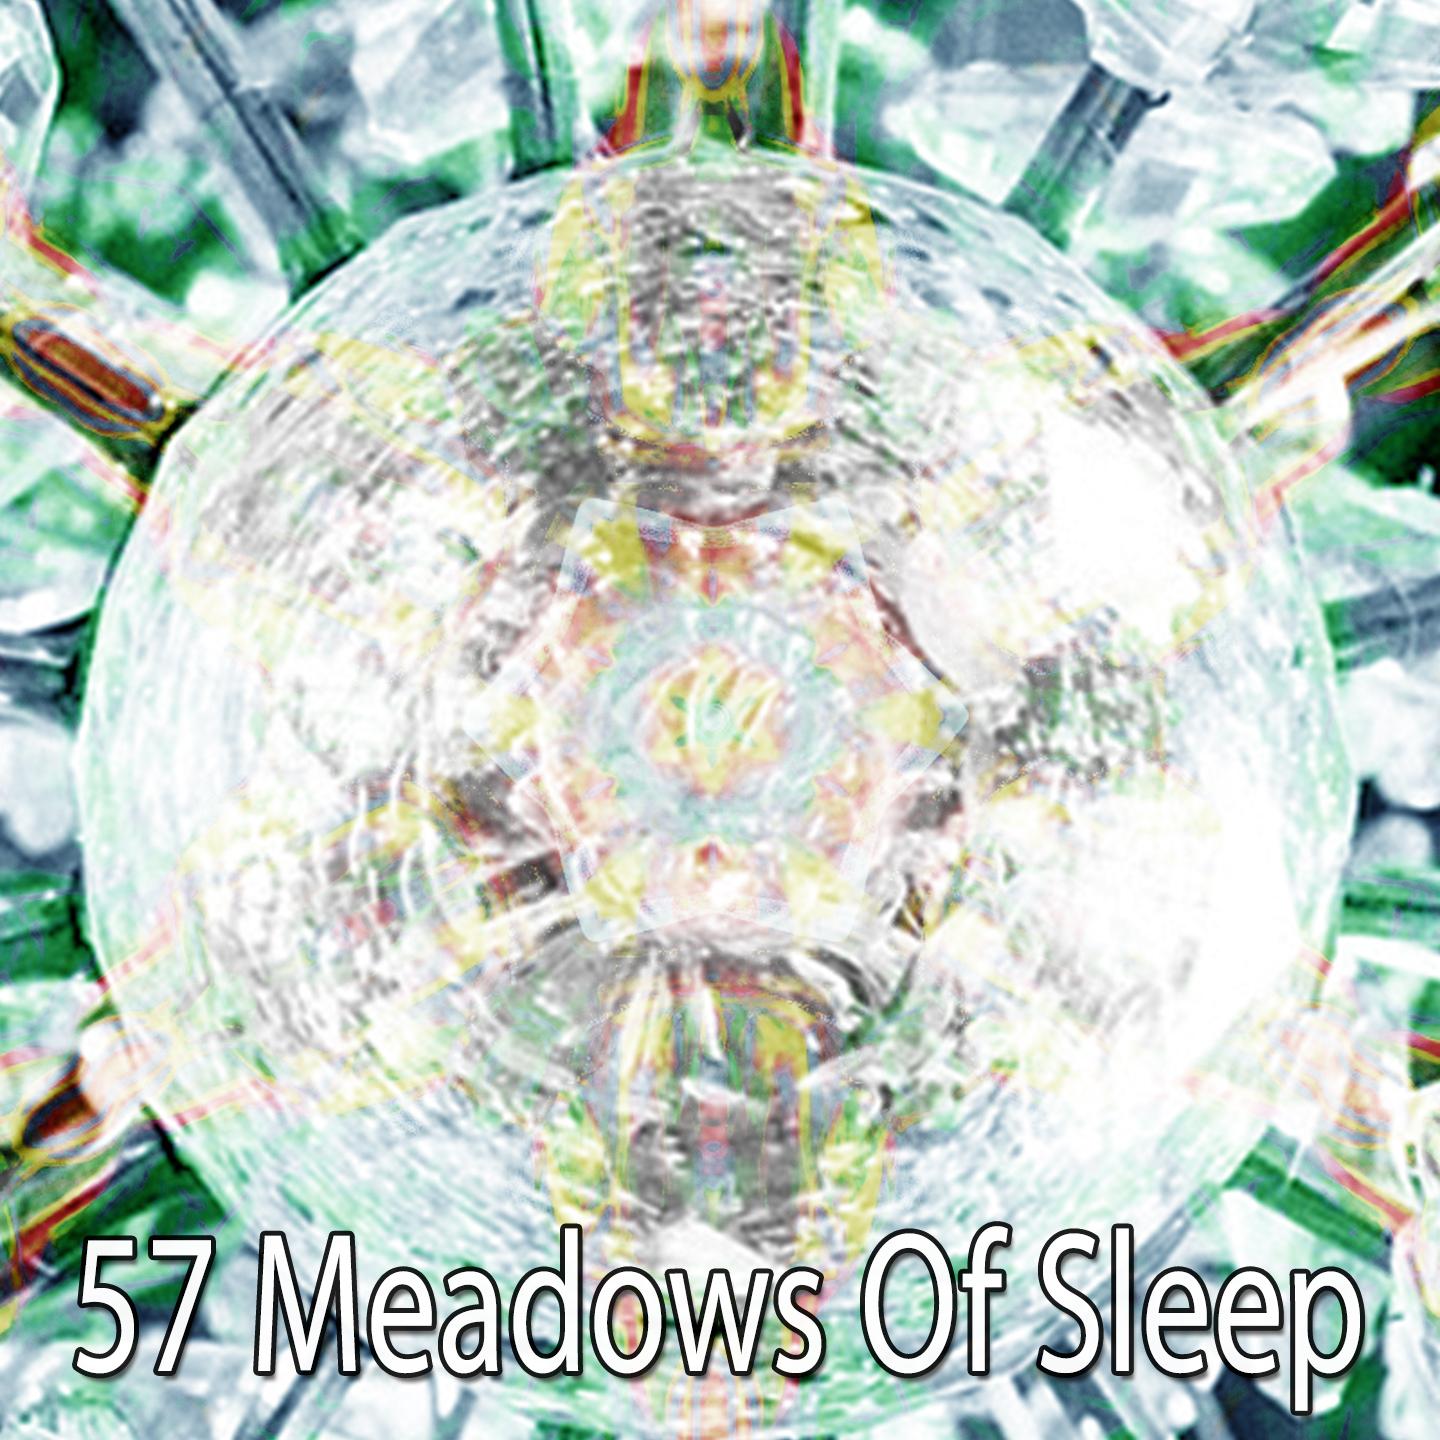 57 Meadows of Sleep